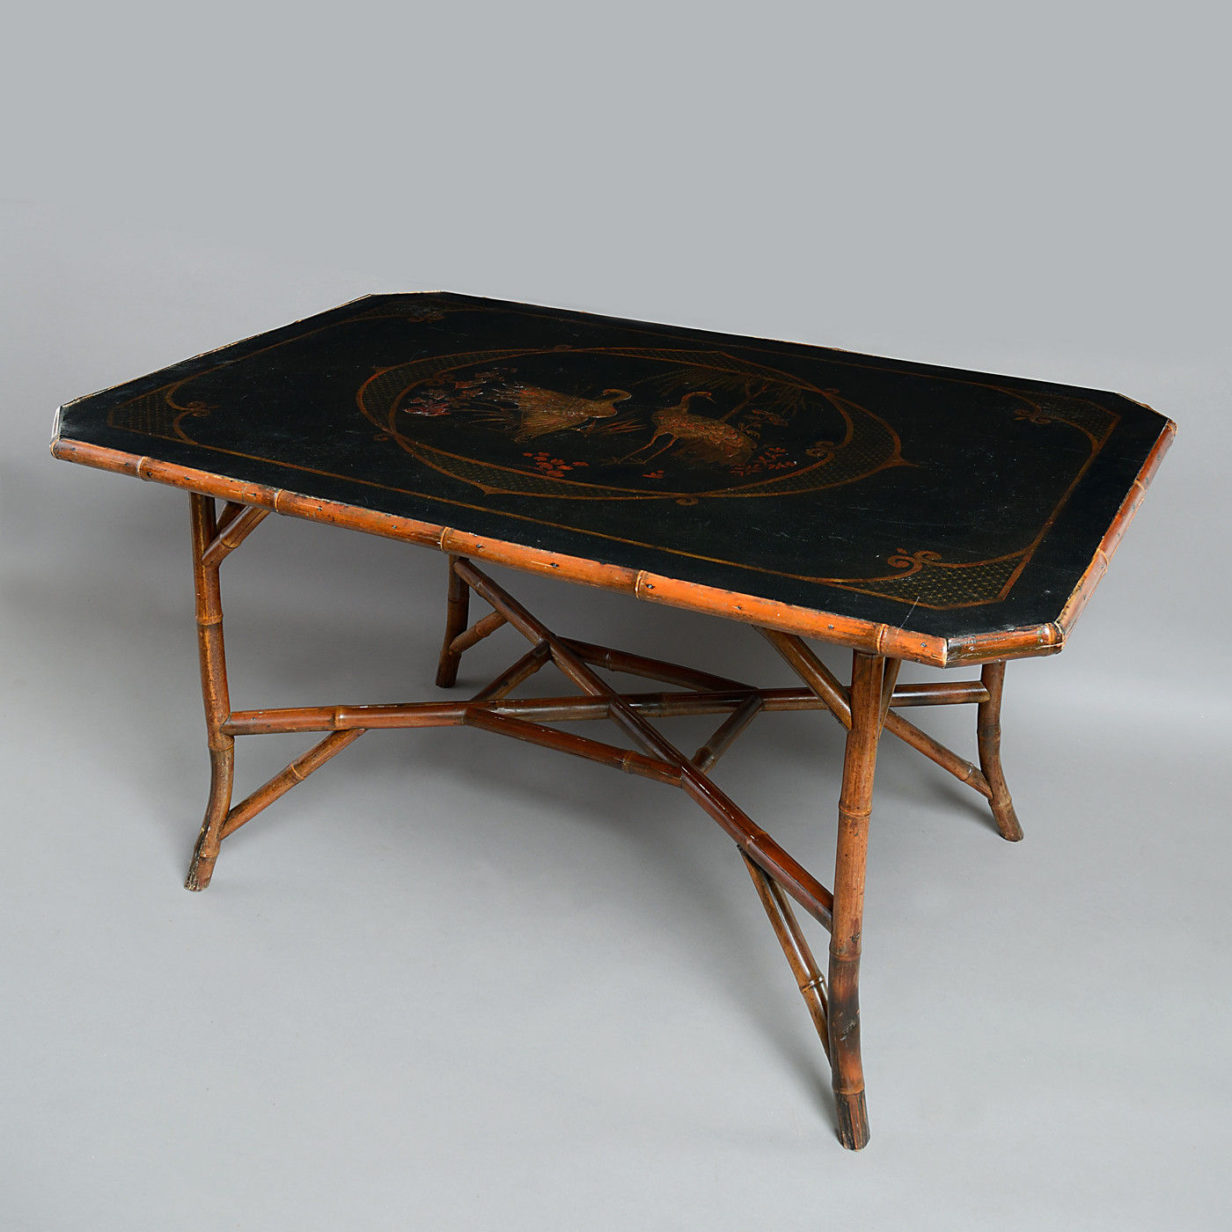 A 19th century lacquer centre table